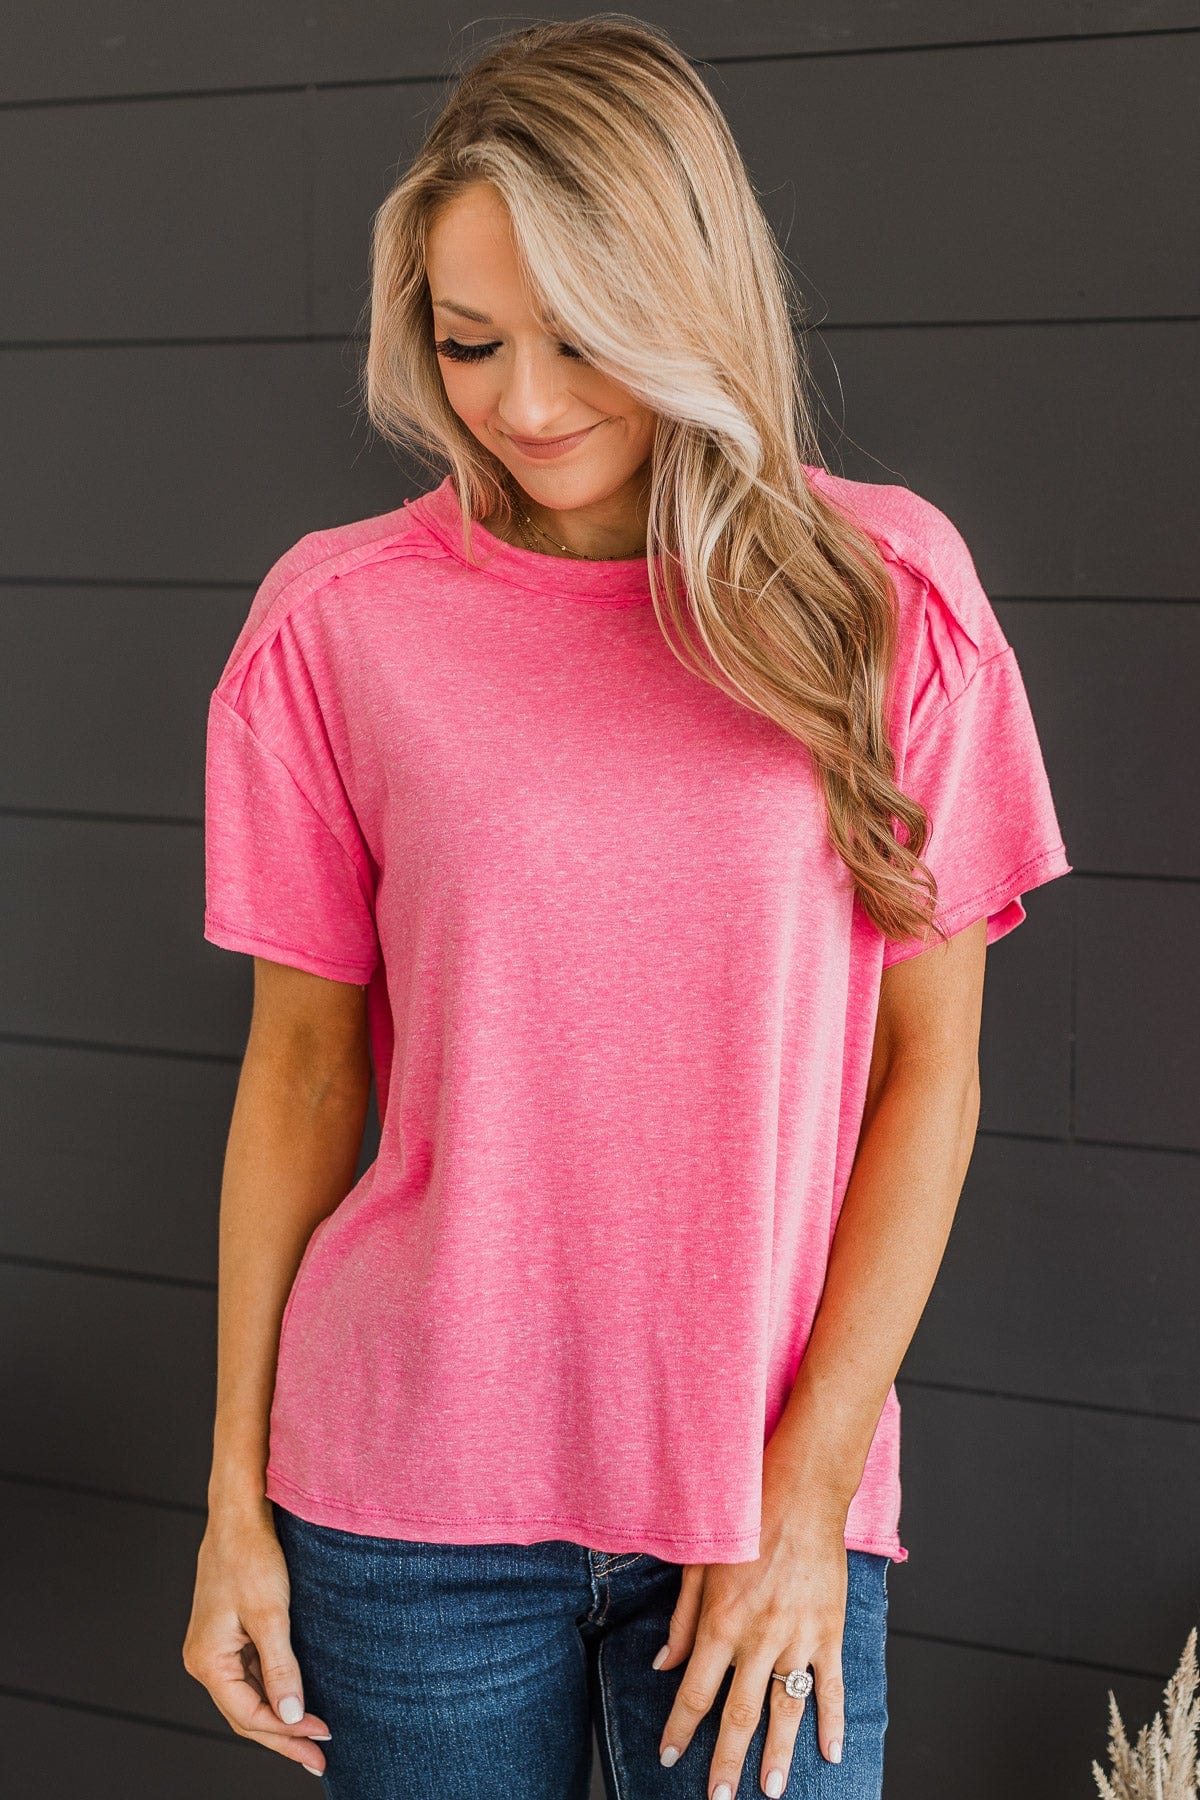 Say It's True Knit Top- Bright Pink